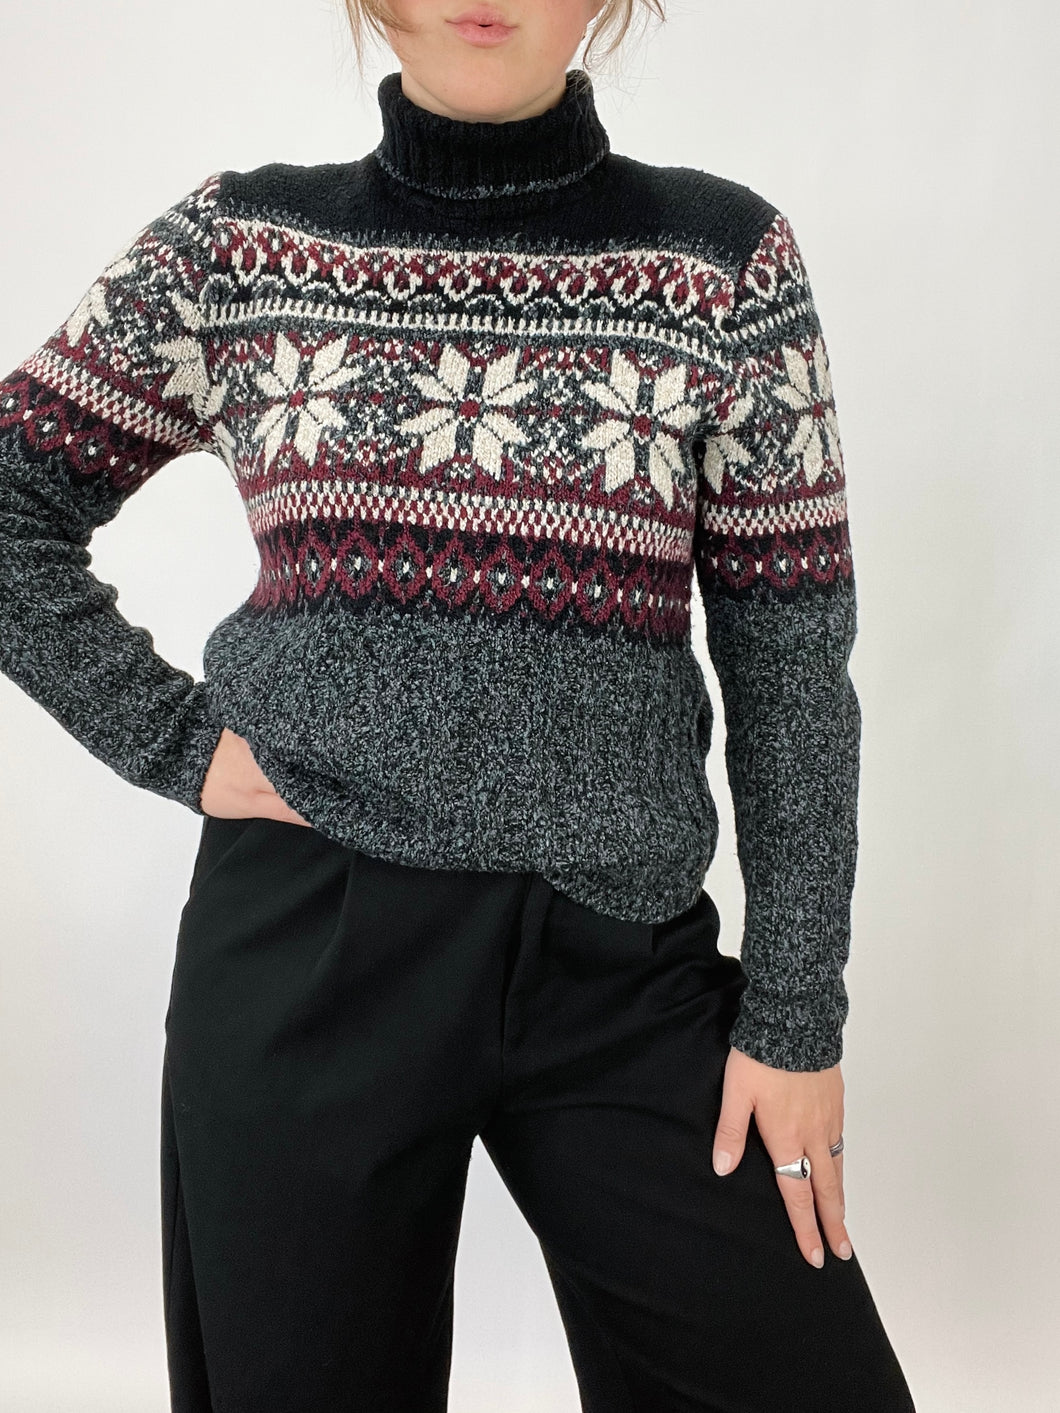 90s Fair Isle Turtleneck Sweater (M)